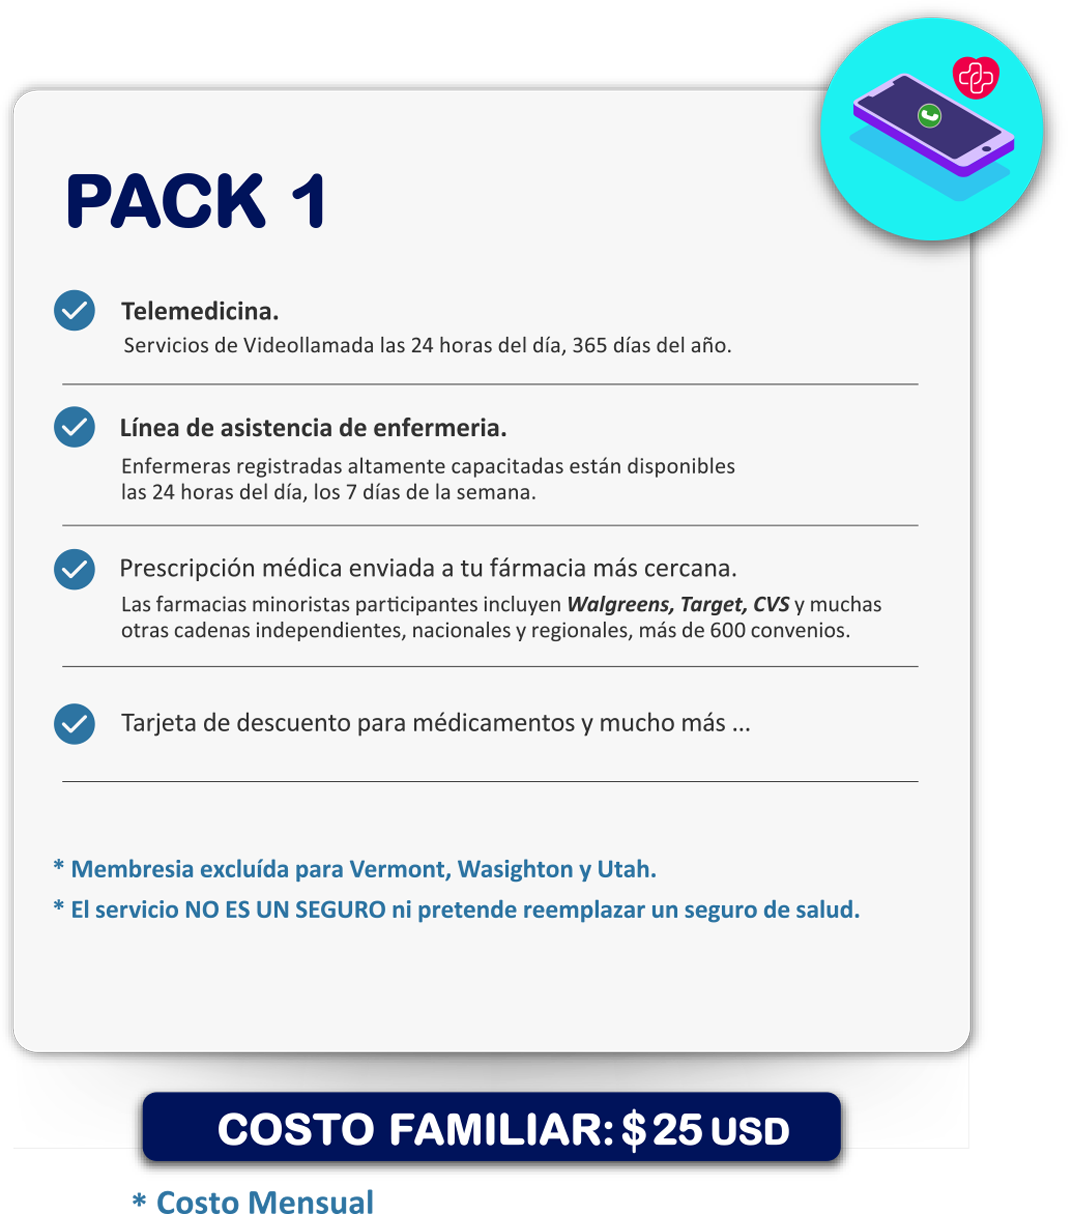 Pack 1